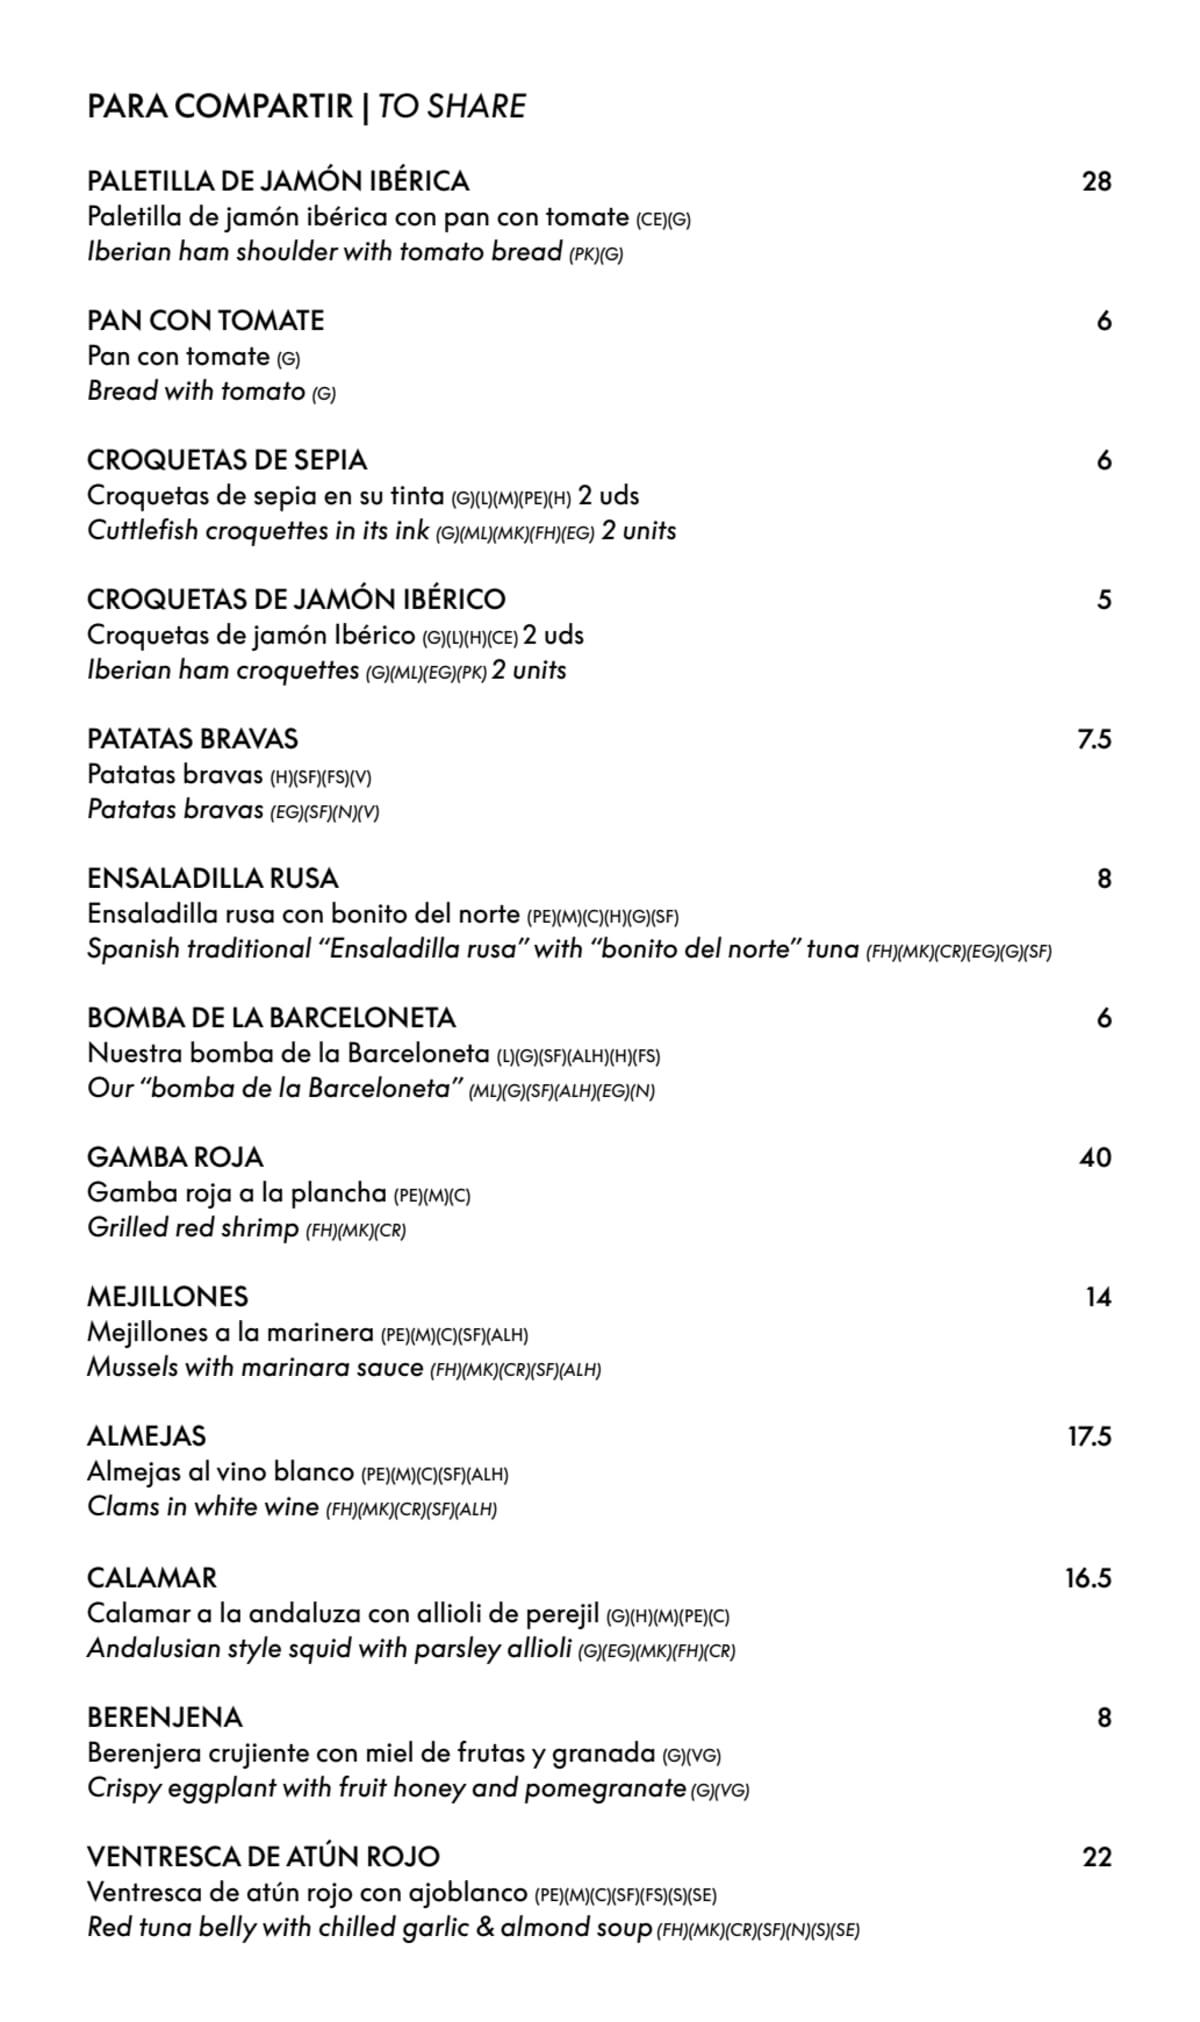 Salt - Hotel W Barcelona menu